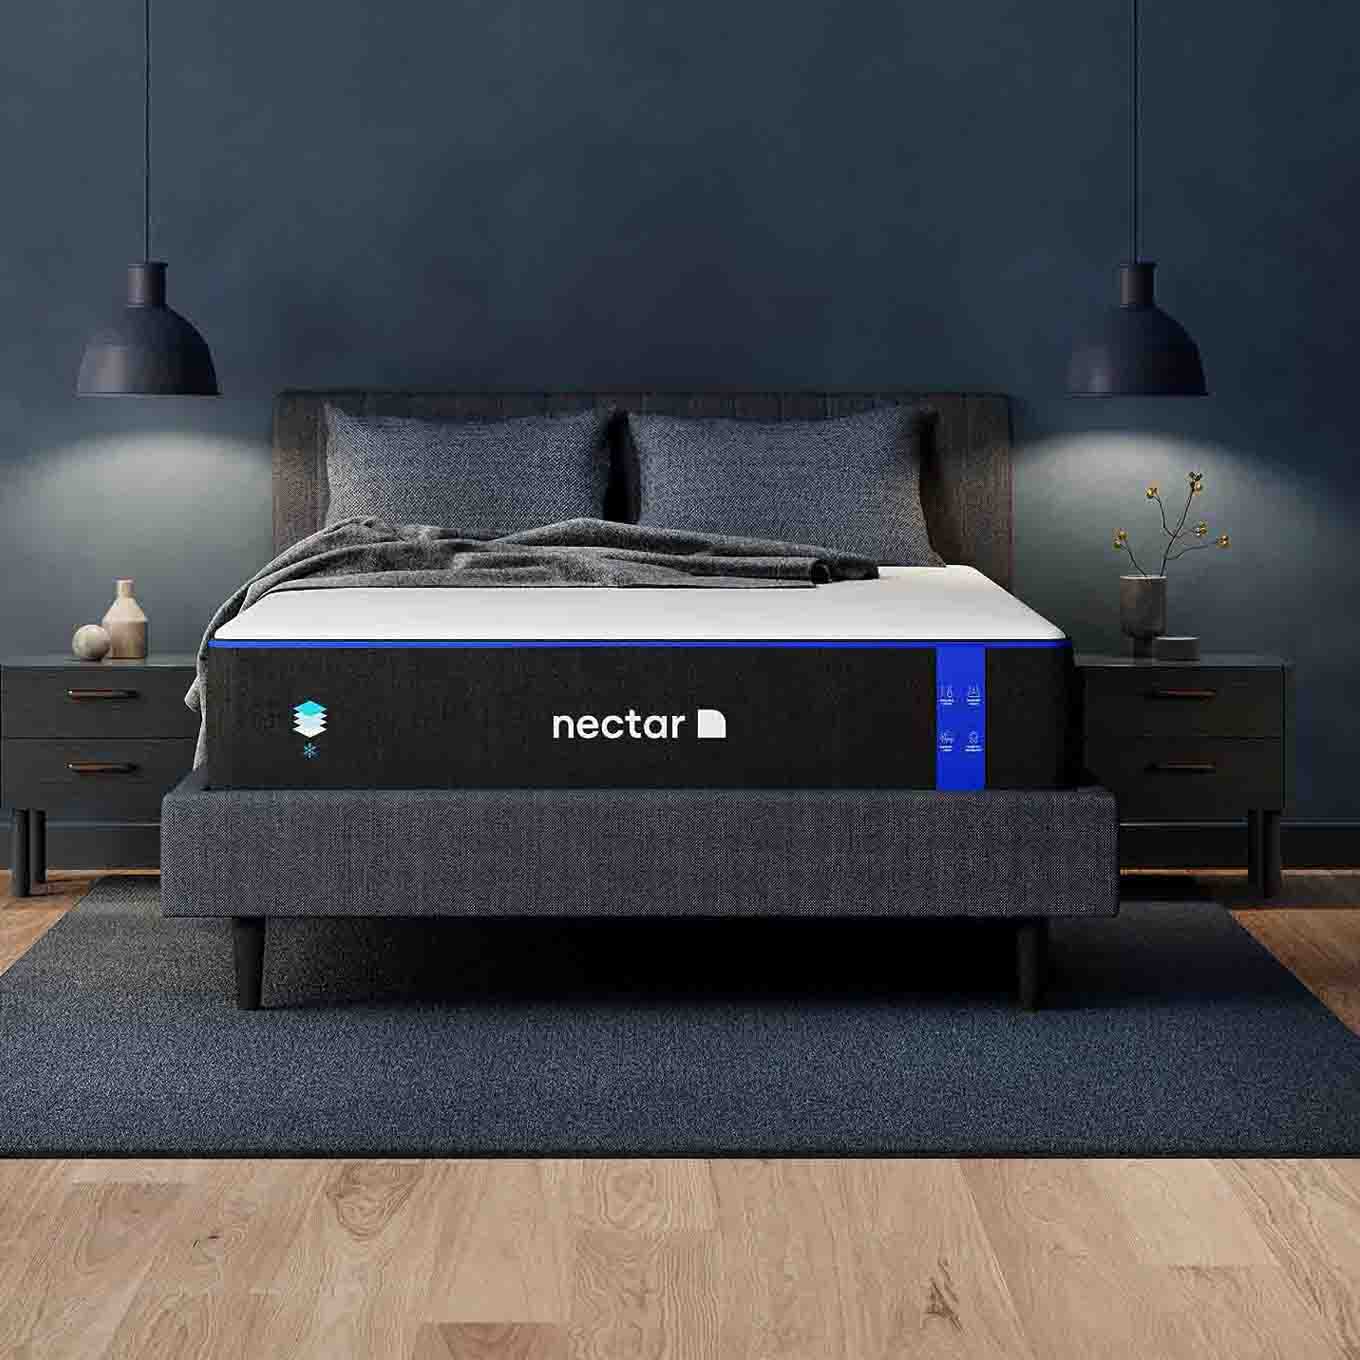 Dark blue Nectar mattress in room setting